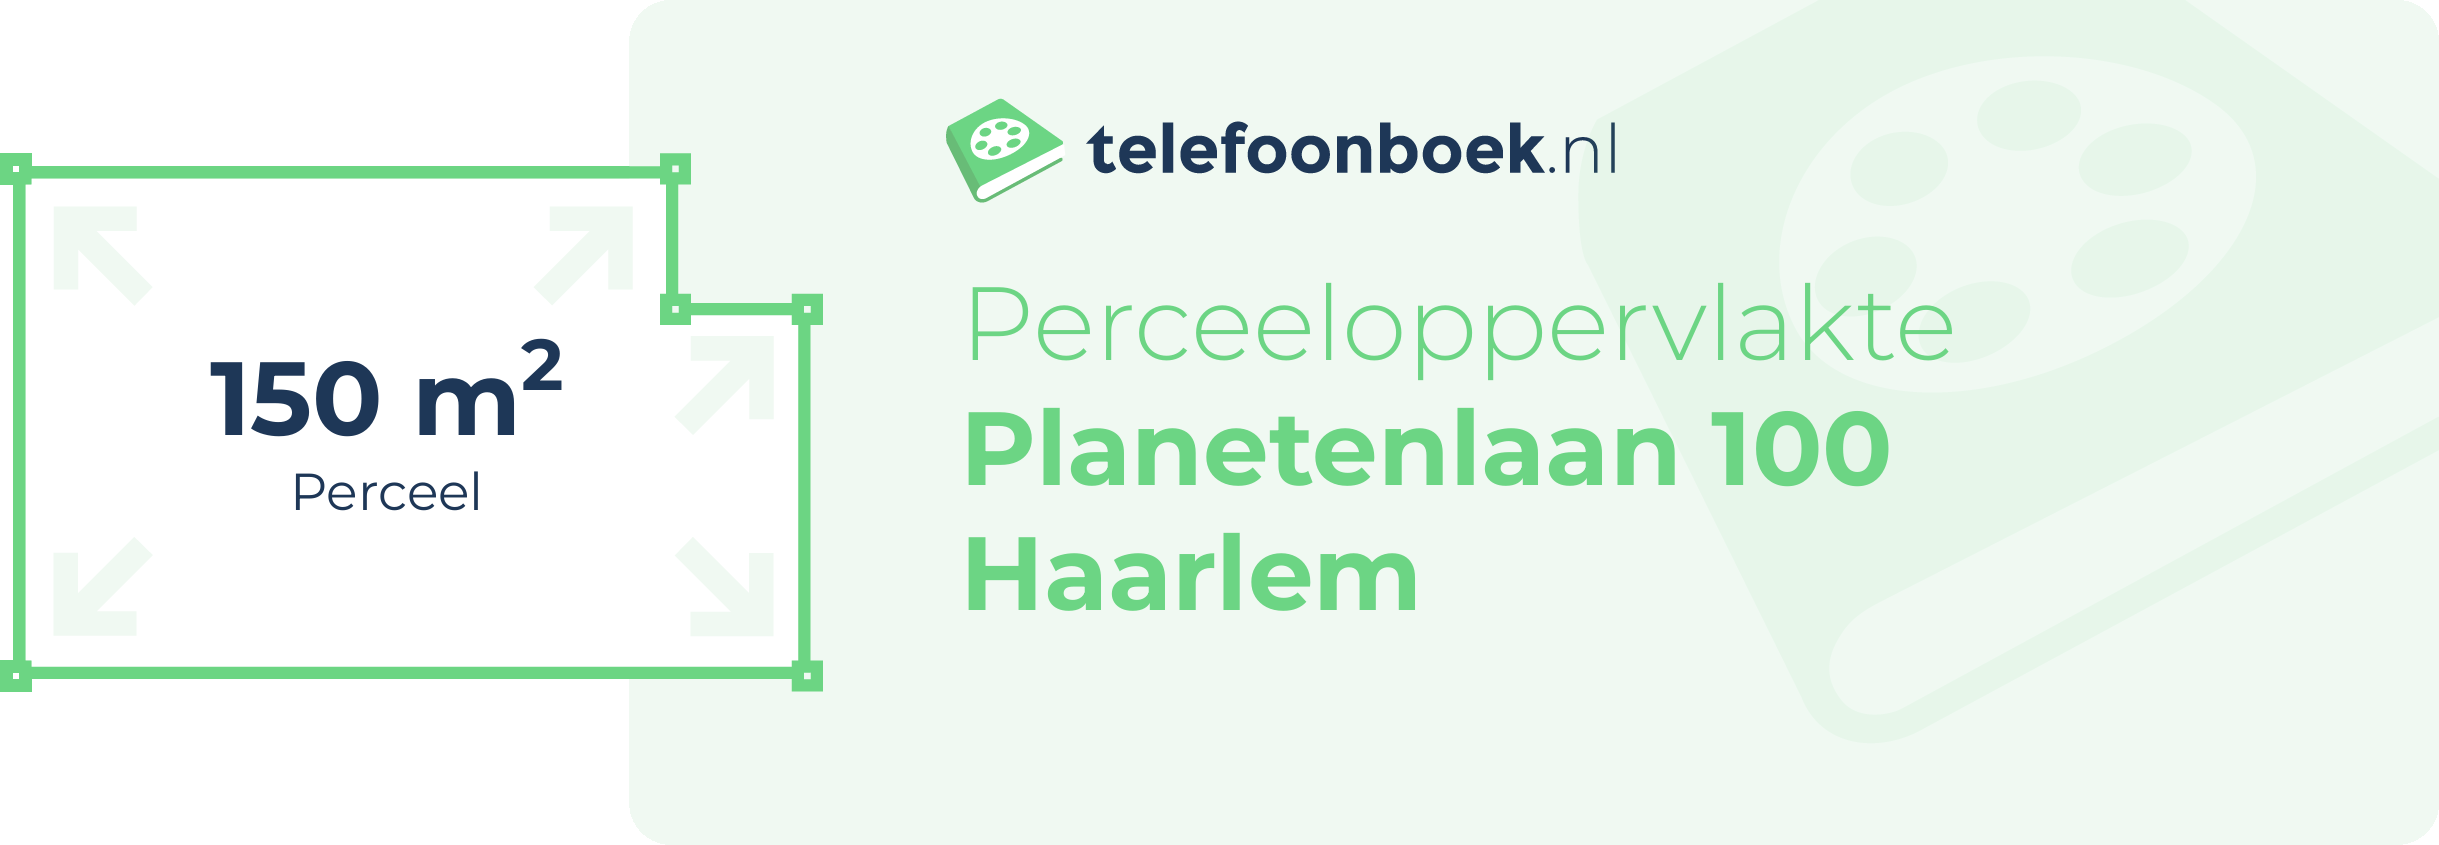 Perceeloppervlakte Planetenlaan 100 Haarlem